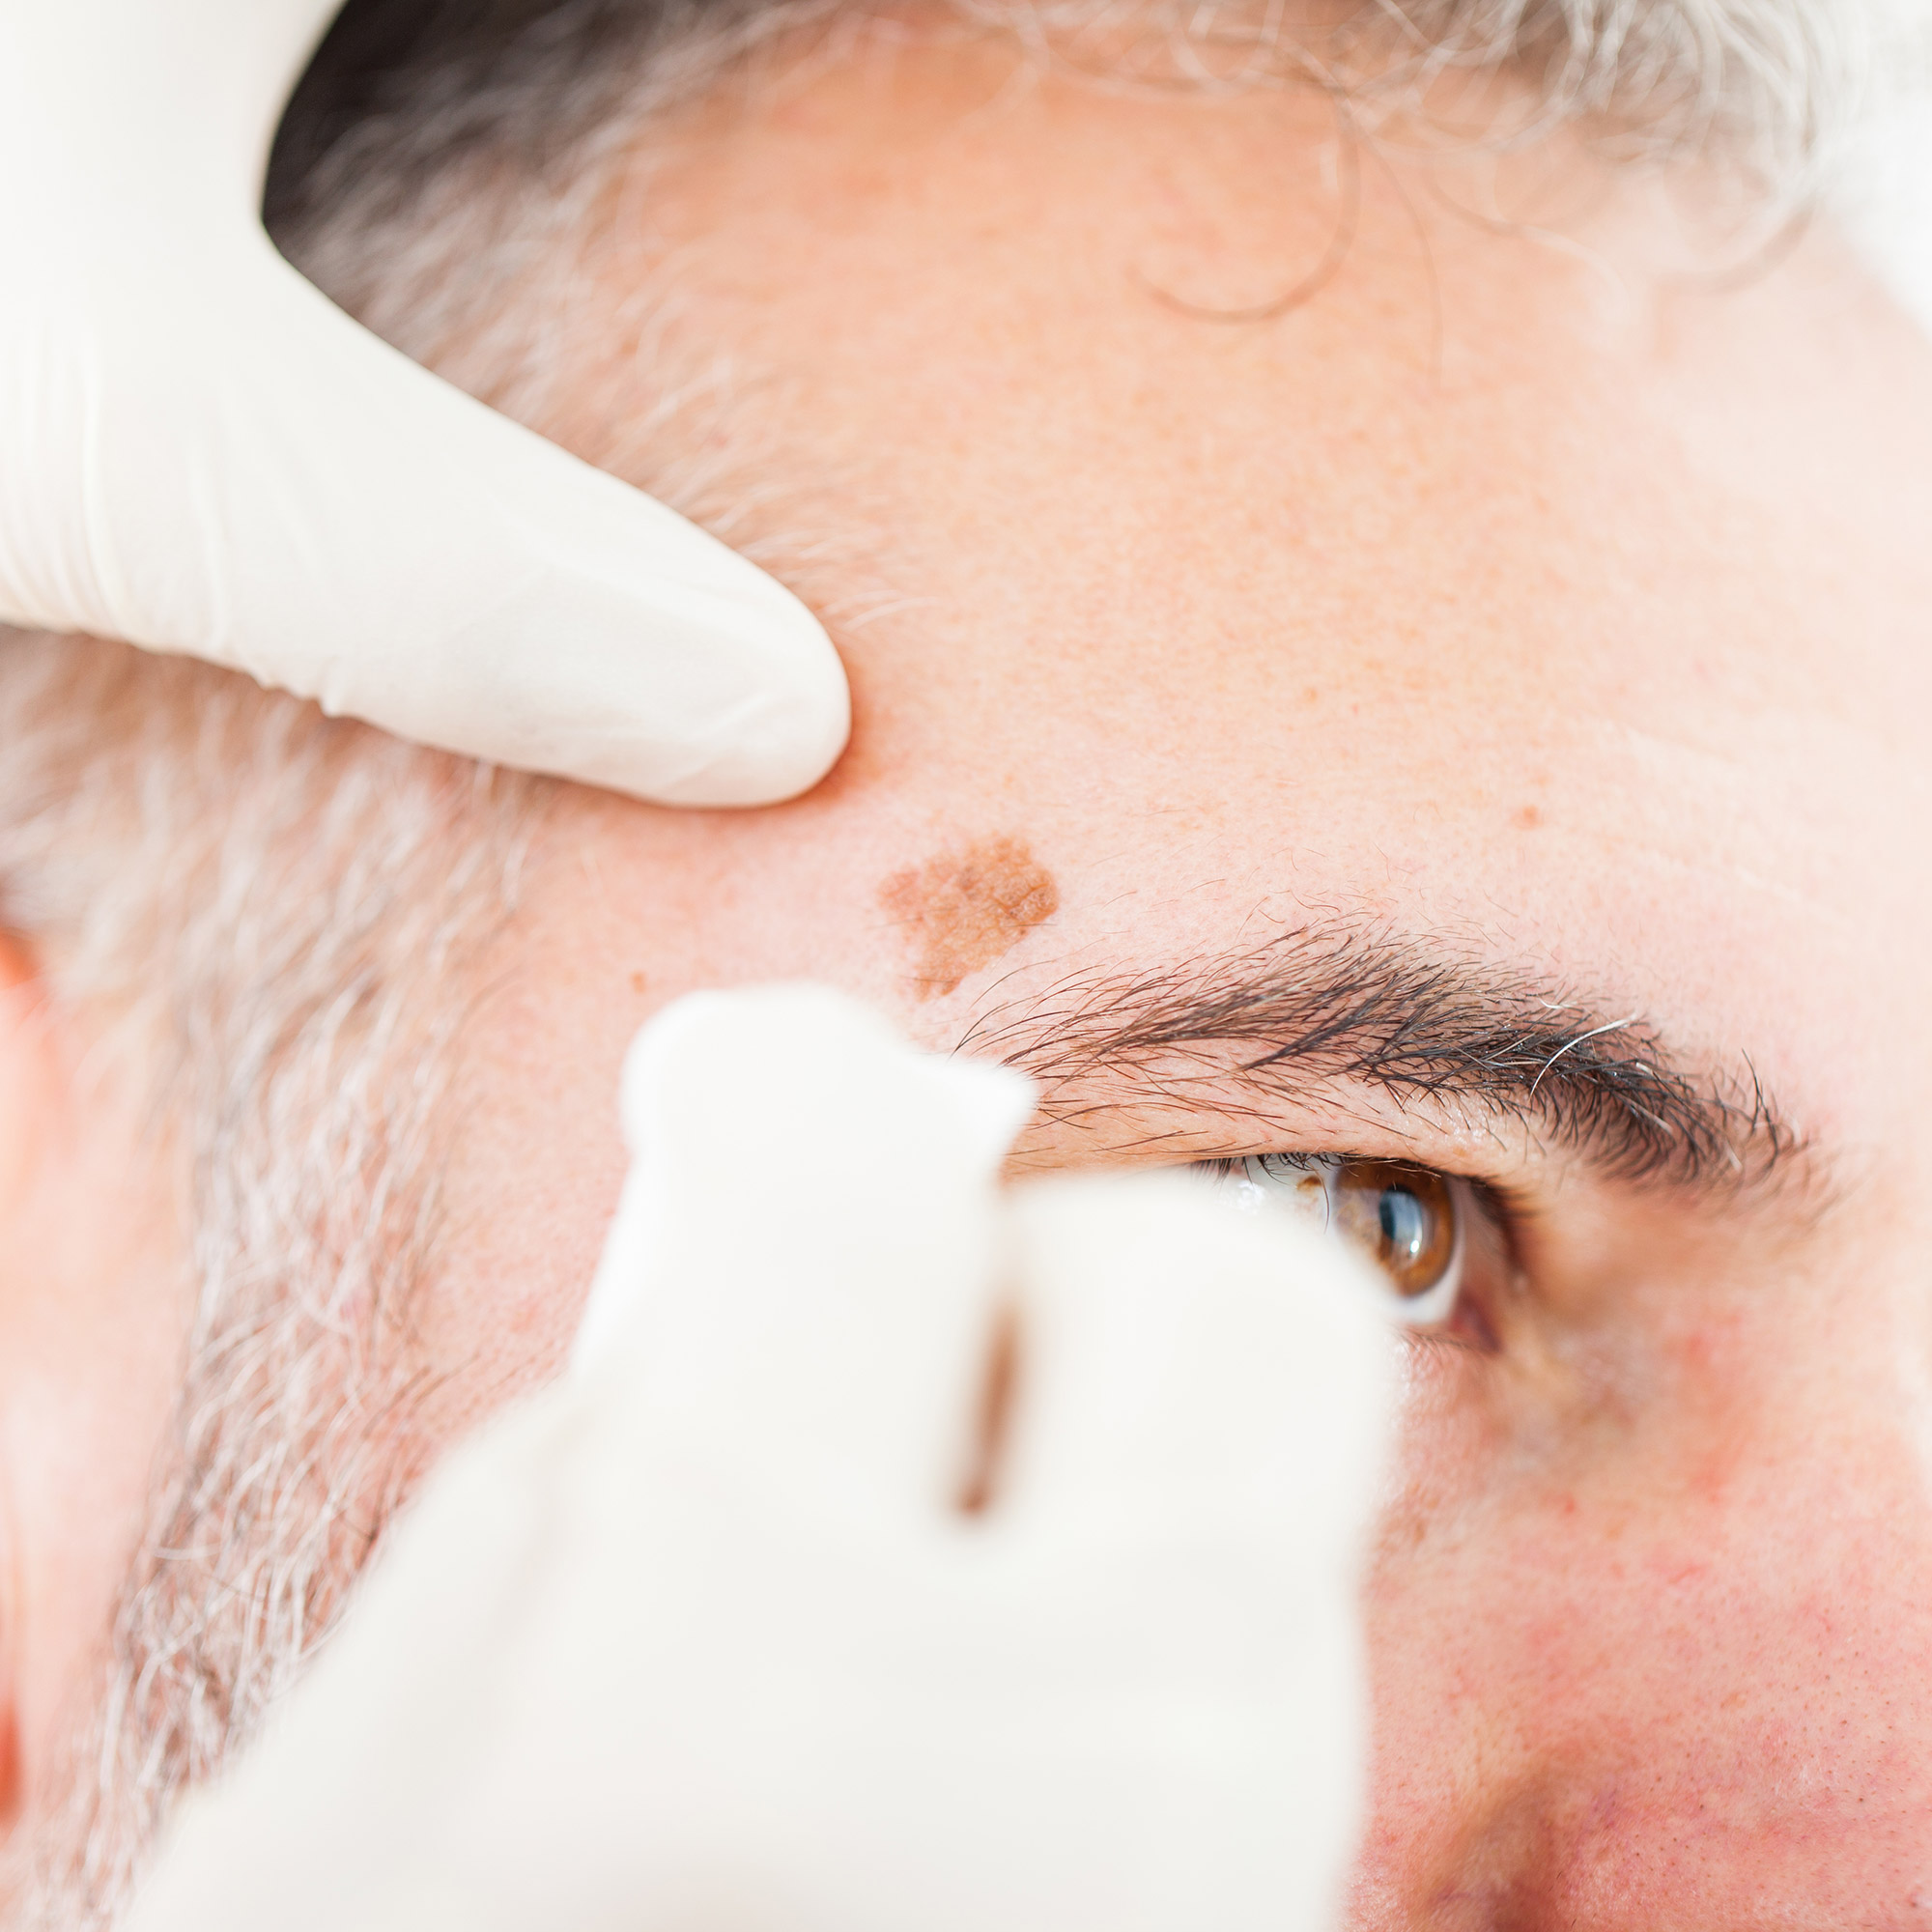 Getting Spot removerd | William Samson | New York City Skin Cancer Reconstruction